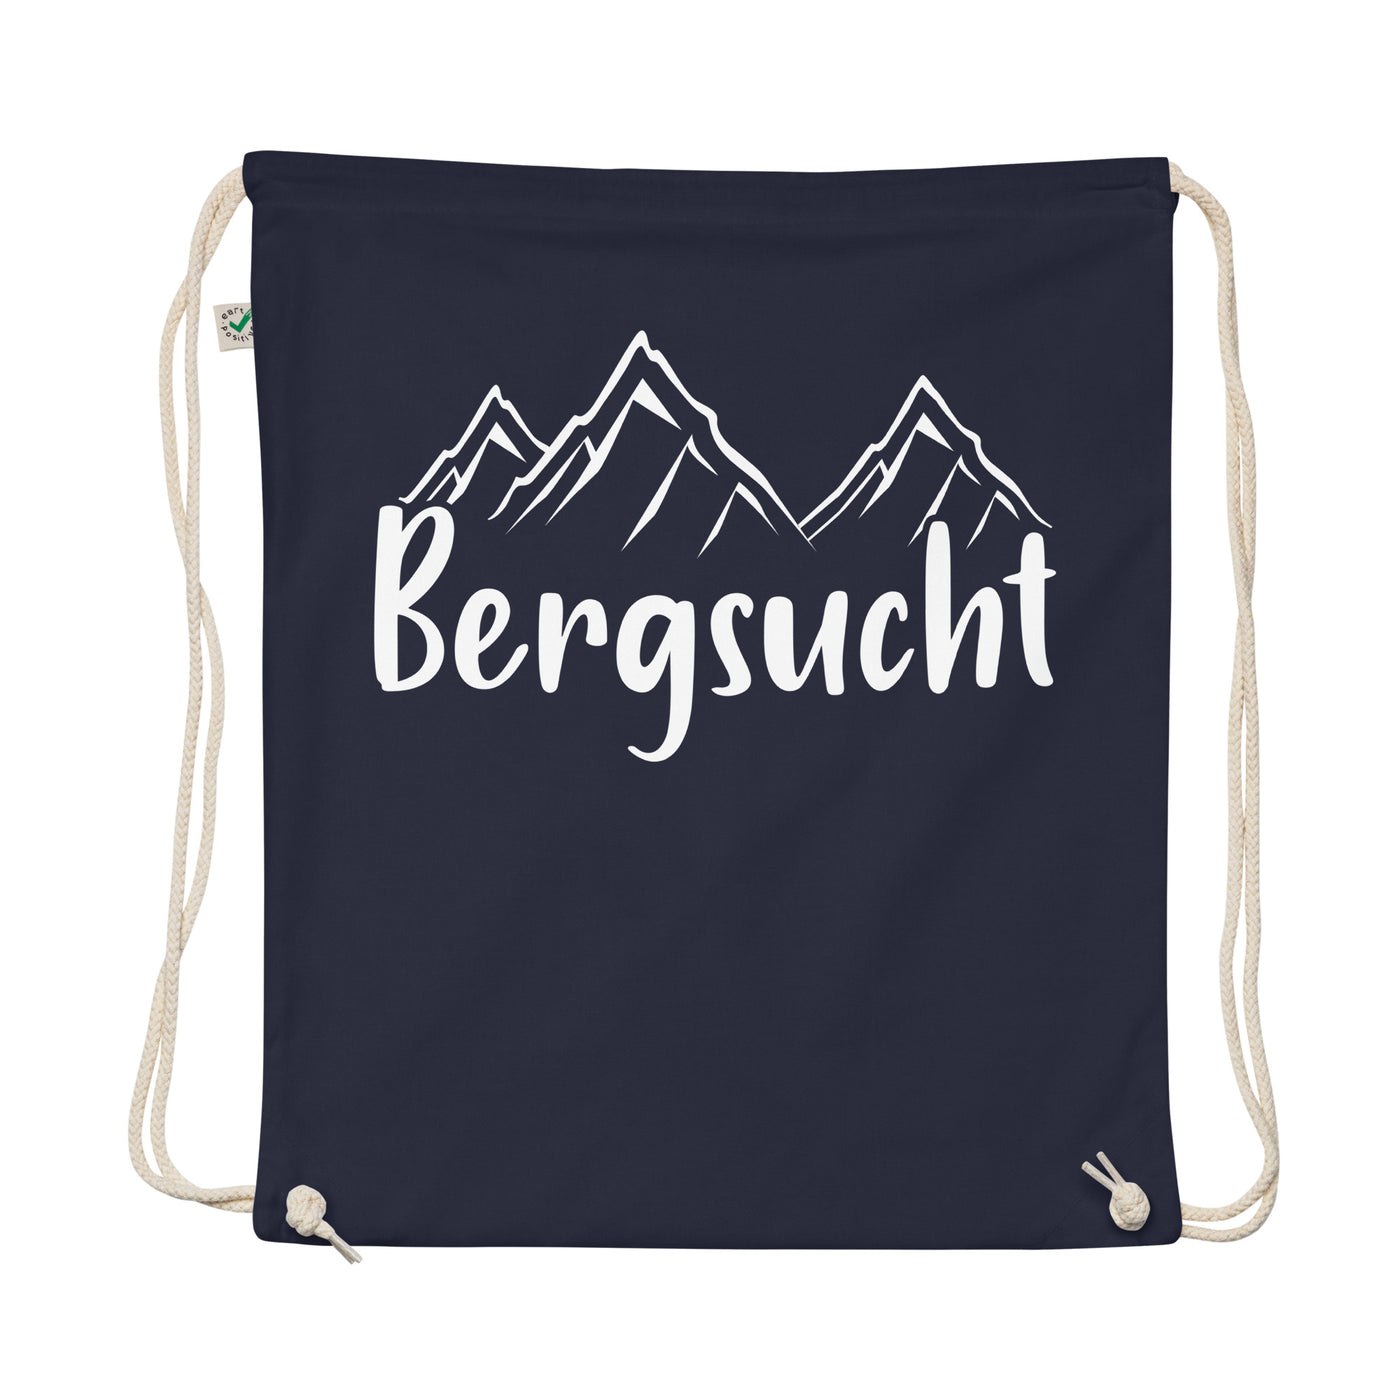 Bergsucht - Organic Turnbeutel berge